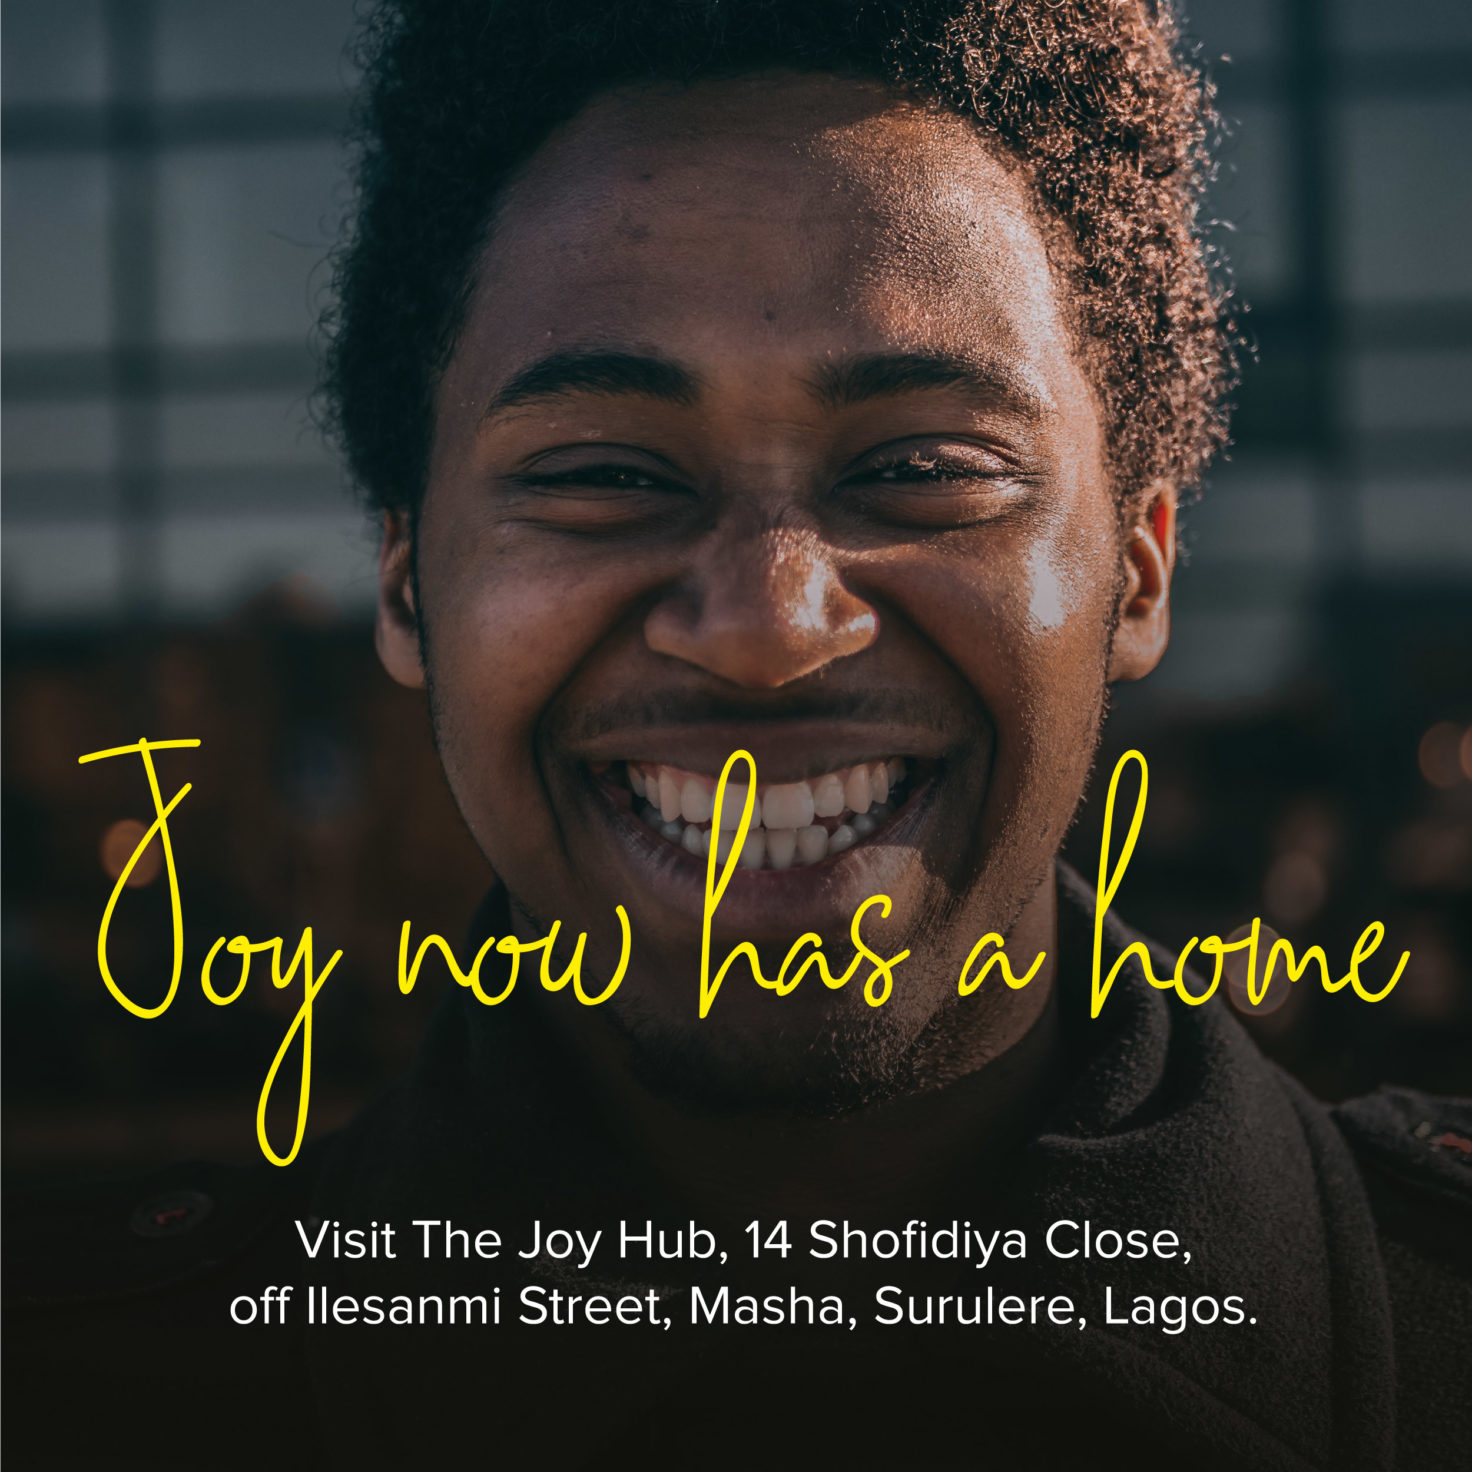 Visit the joy hub